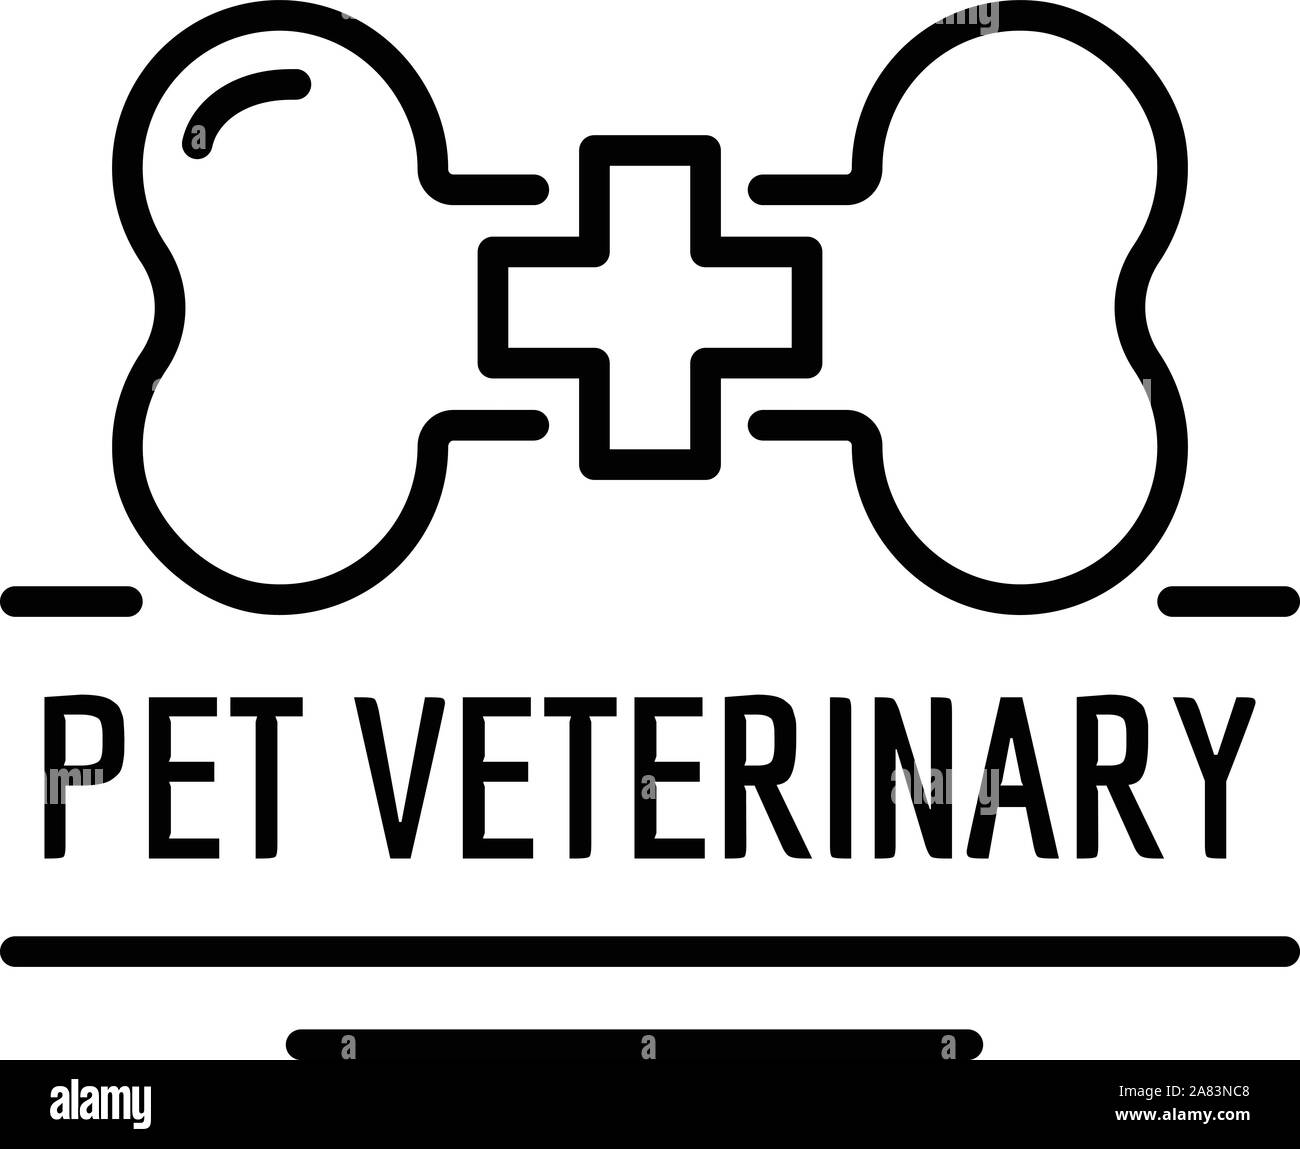 Pet veterinary logo, outline style Stock Vector